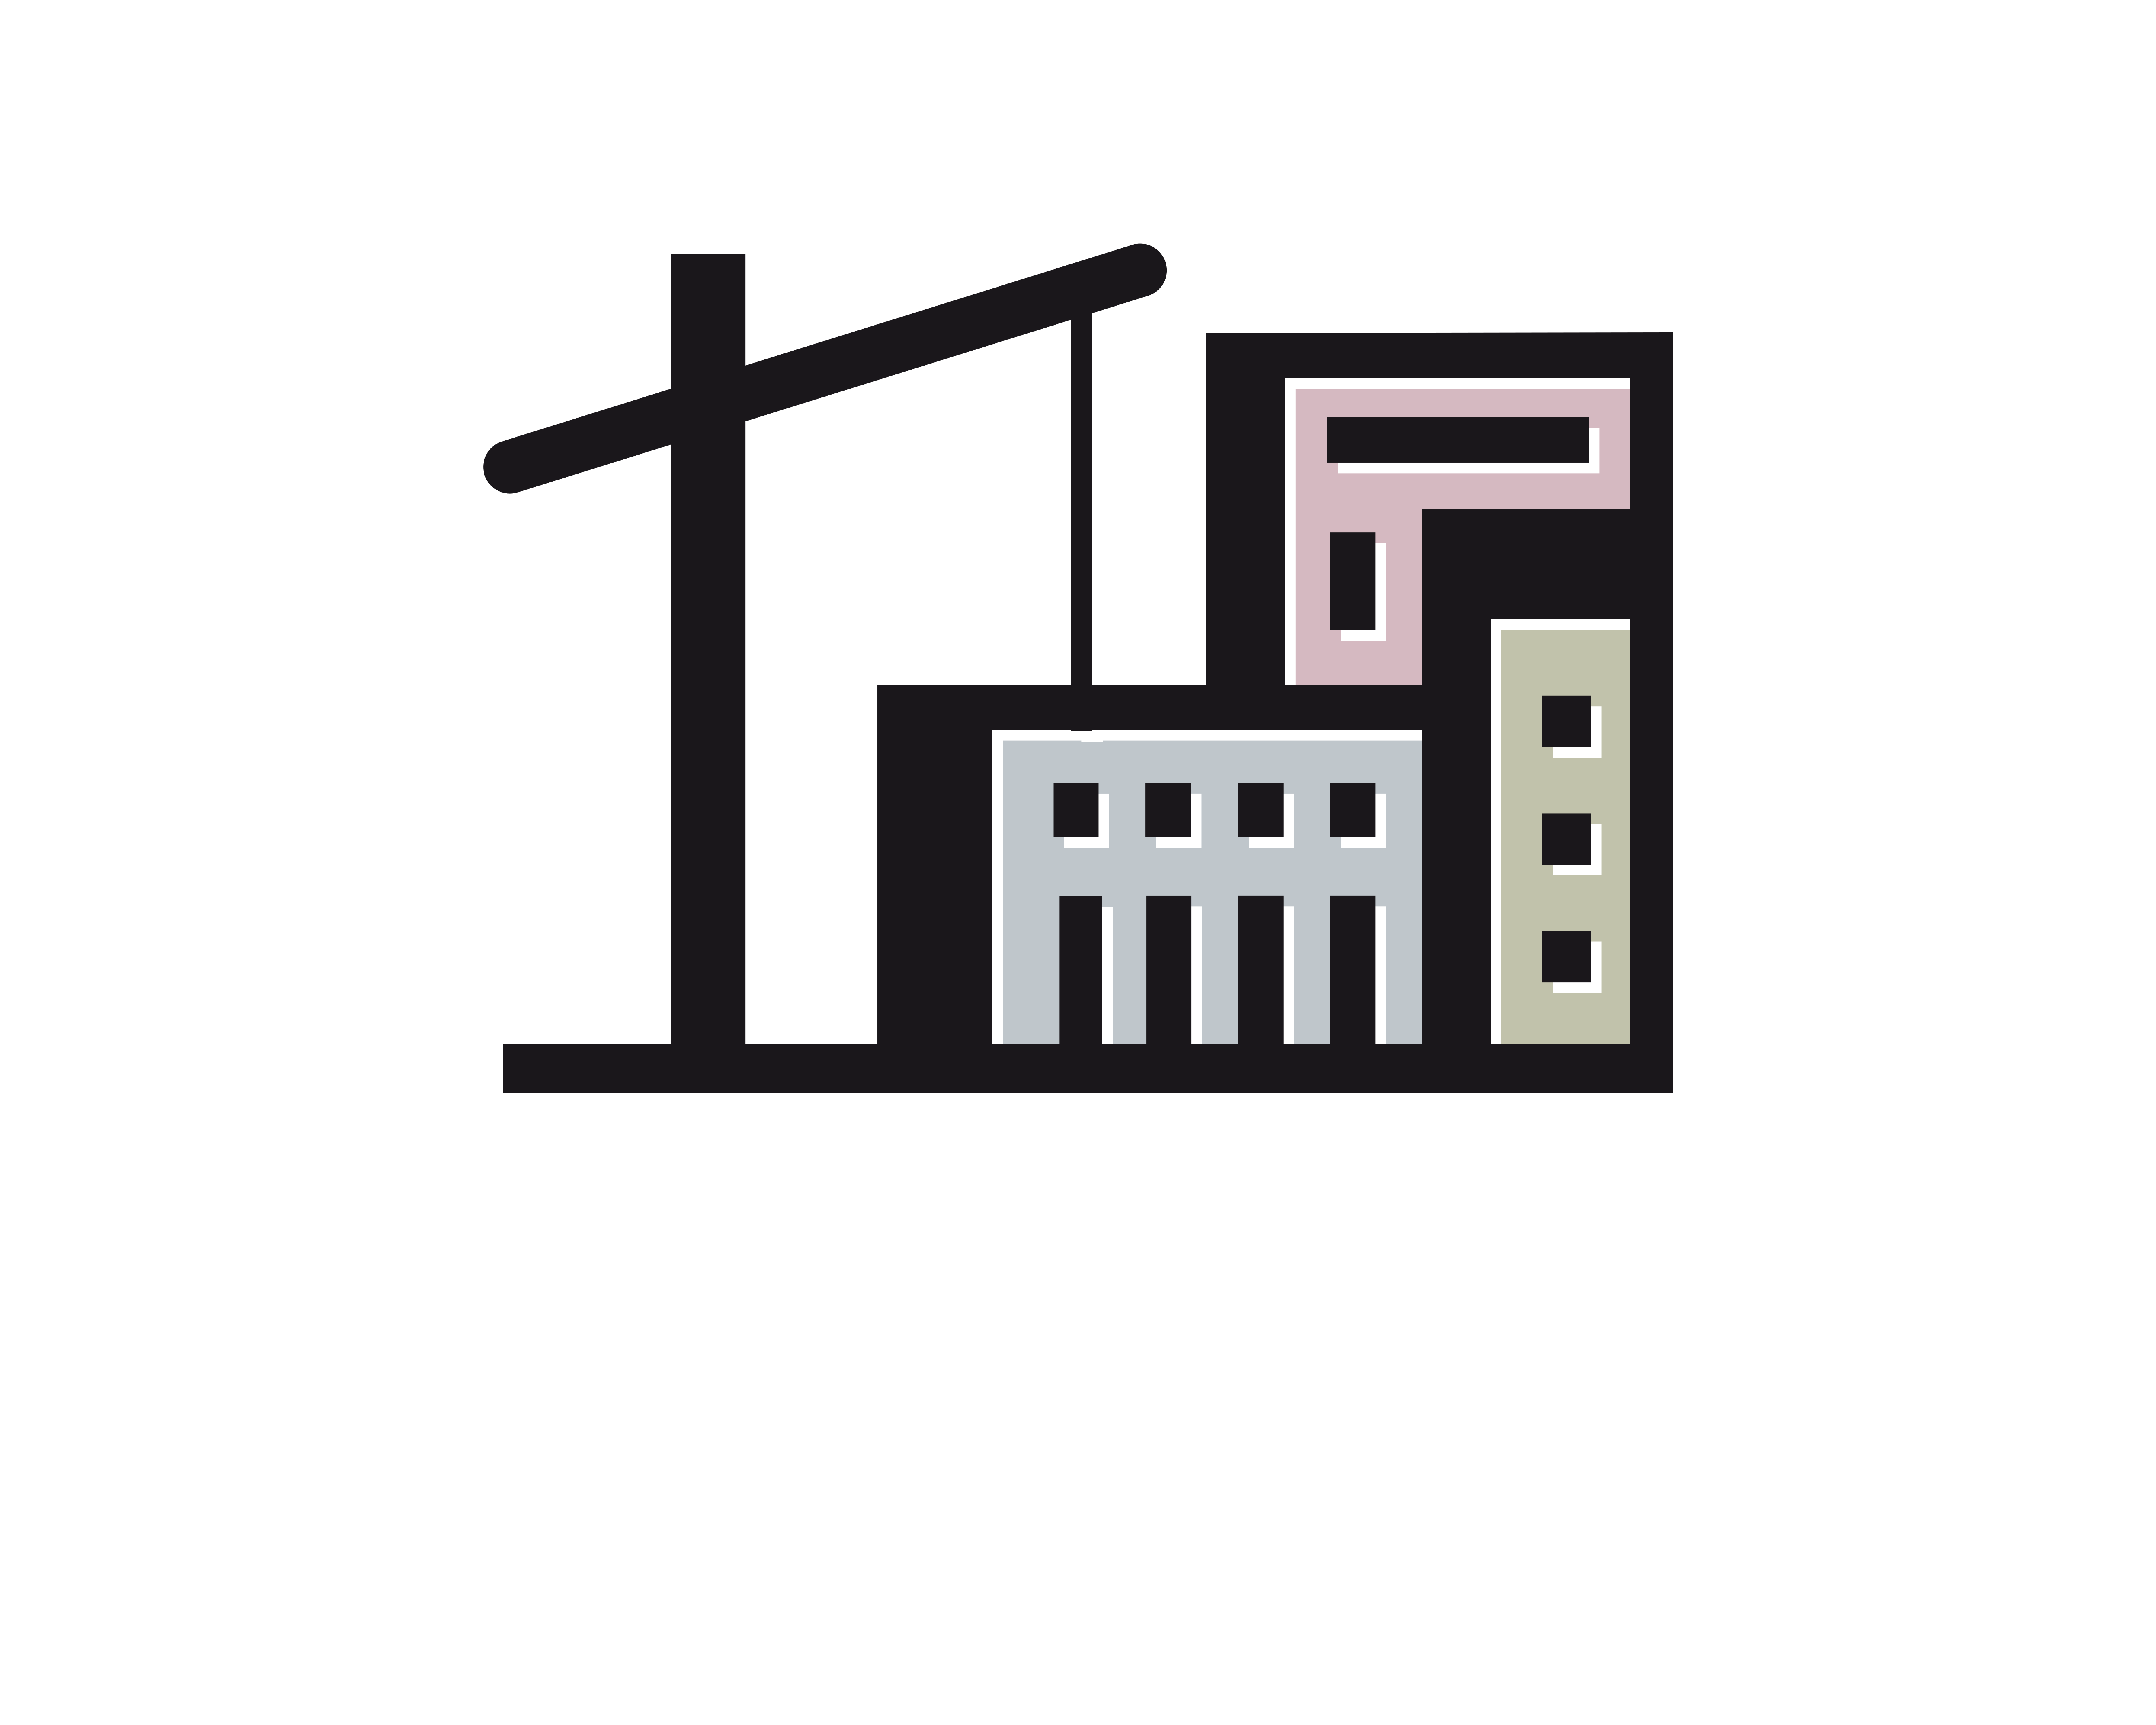 i Riverdale Construction, Inc. Logo